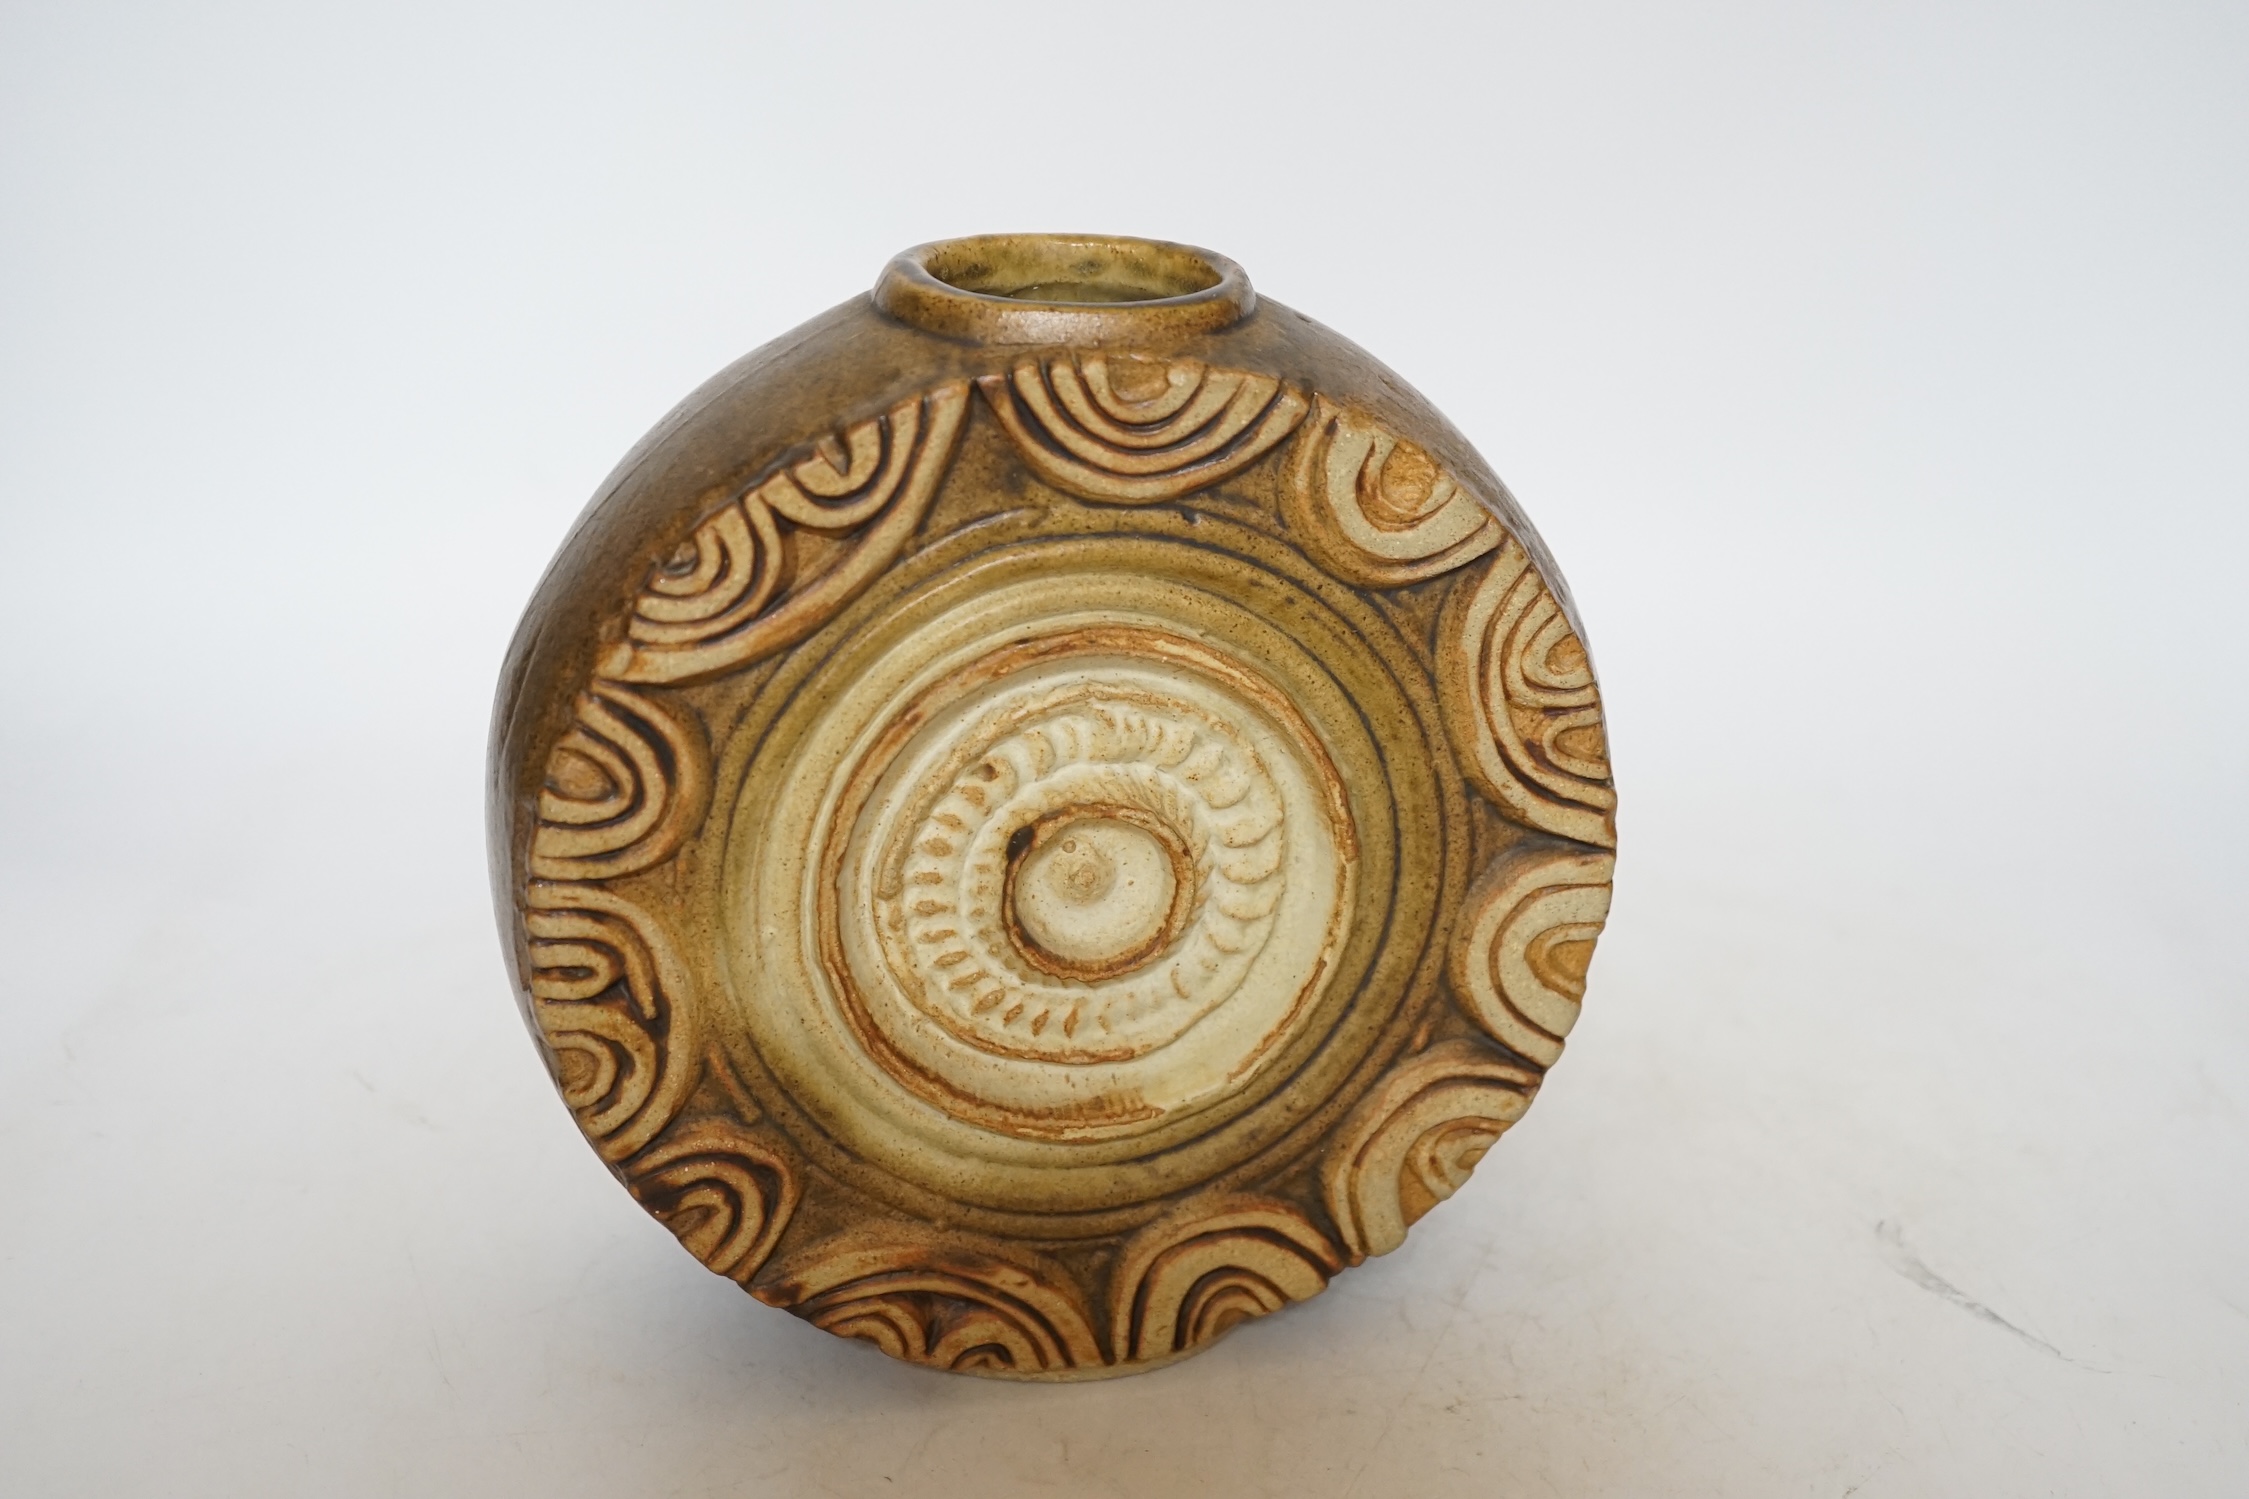 A Bernard Rooke circular pottery vase, signed BR on base, 18.5cm high